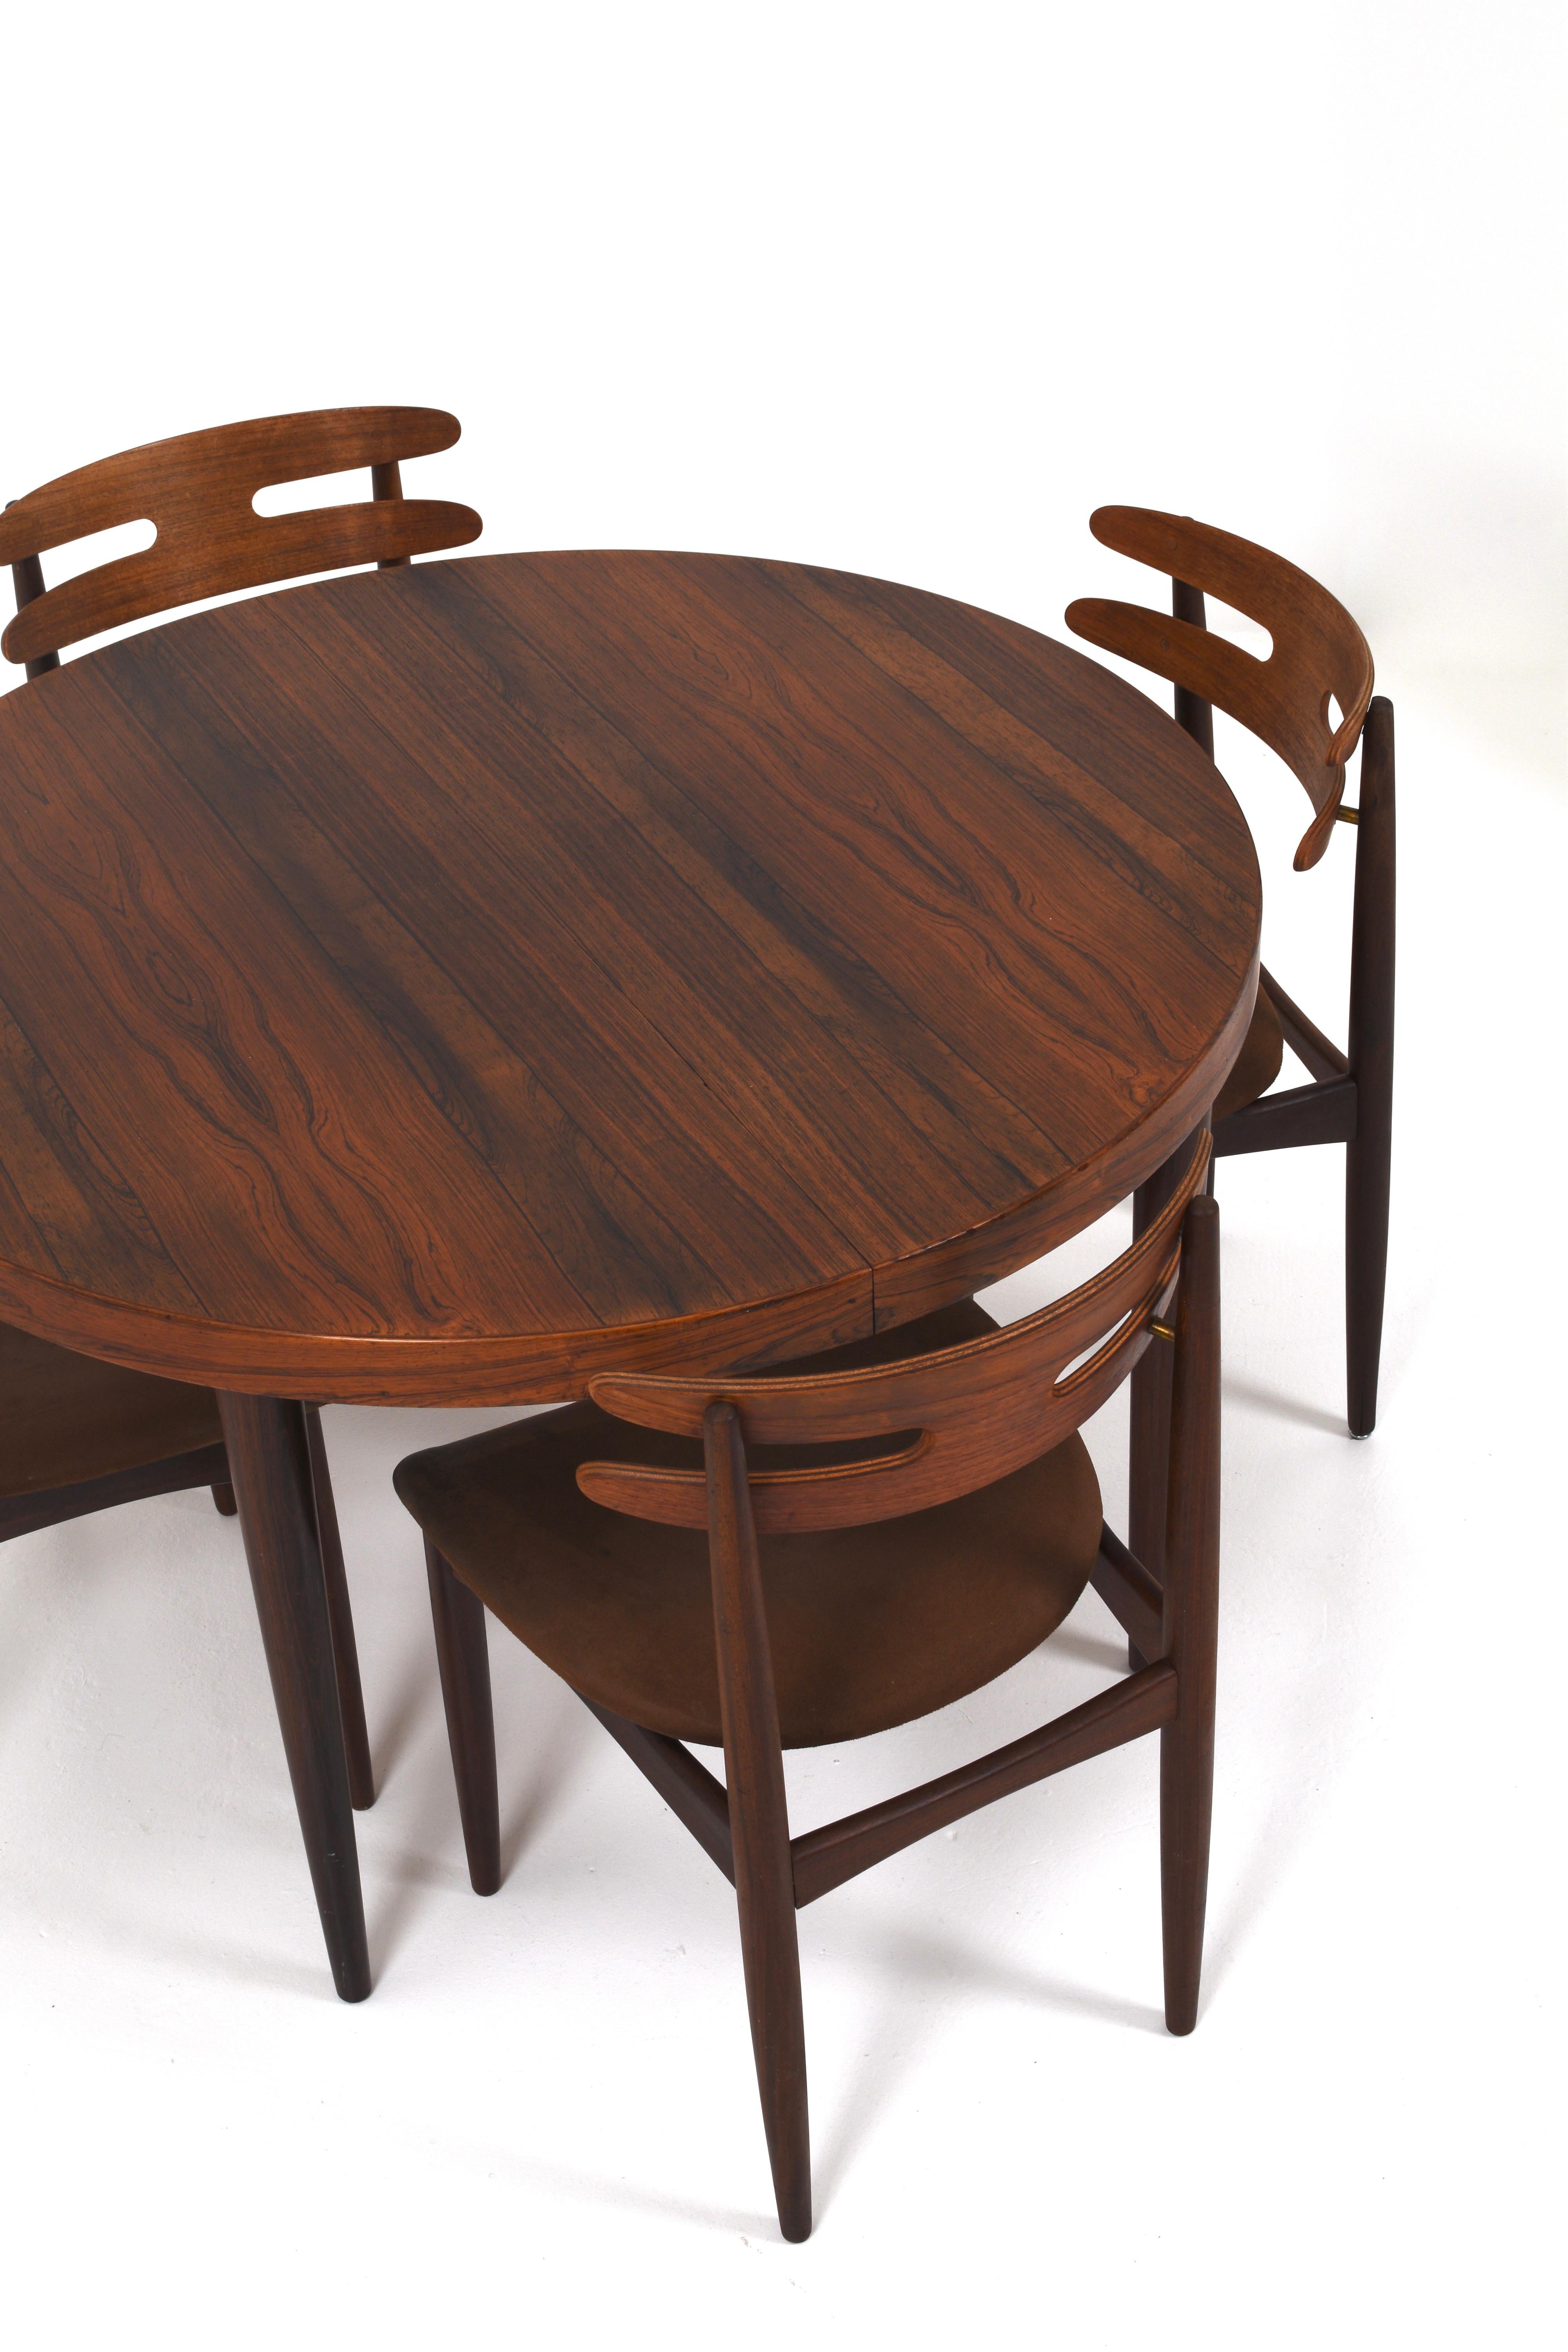 Mid-Century Modern Extendable Round Dining Table by Kai Kristiansen, Denmark, 1960s For Sale